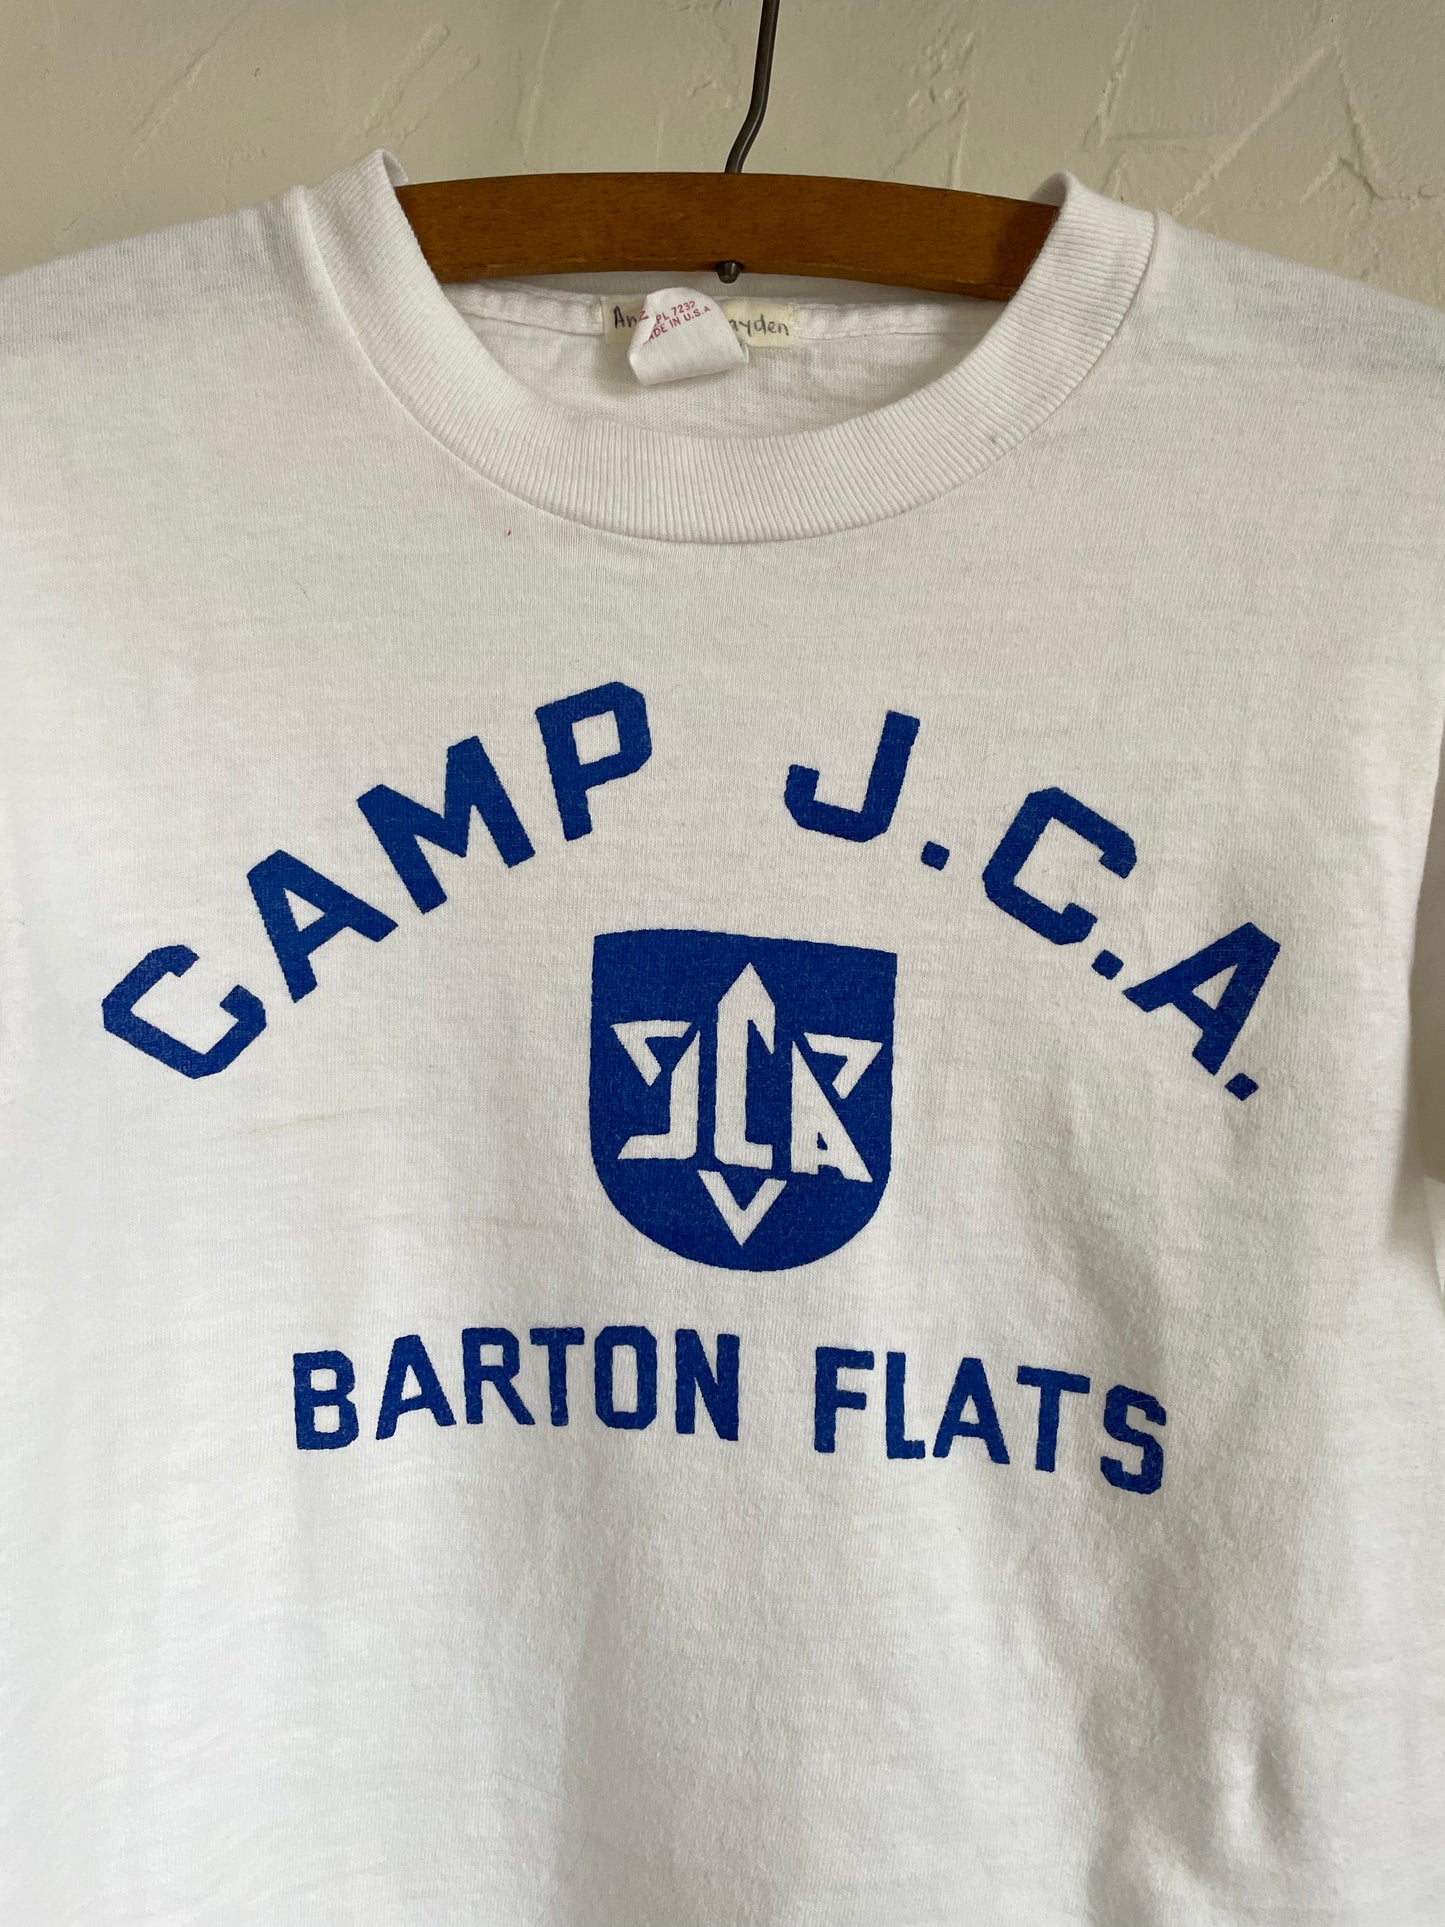 60s Camp J.C.A Barton Flats Tee